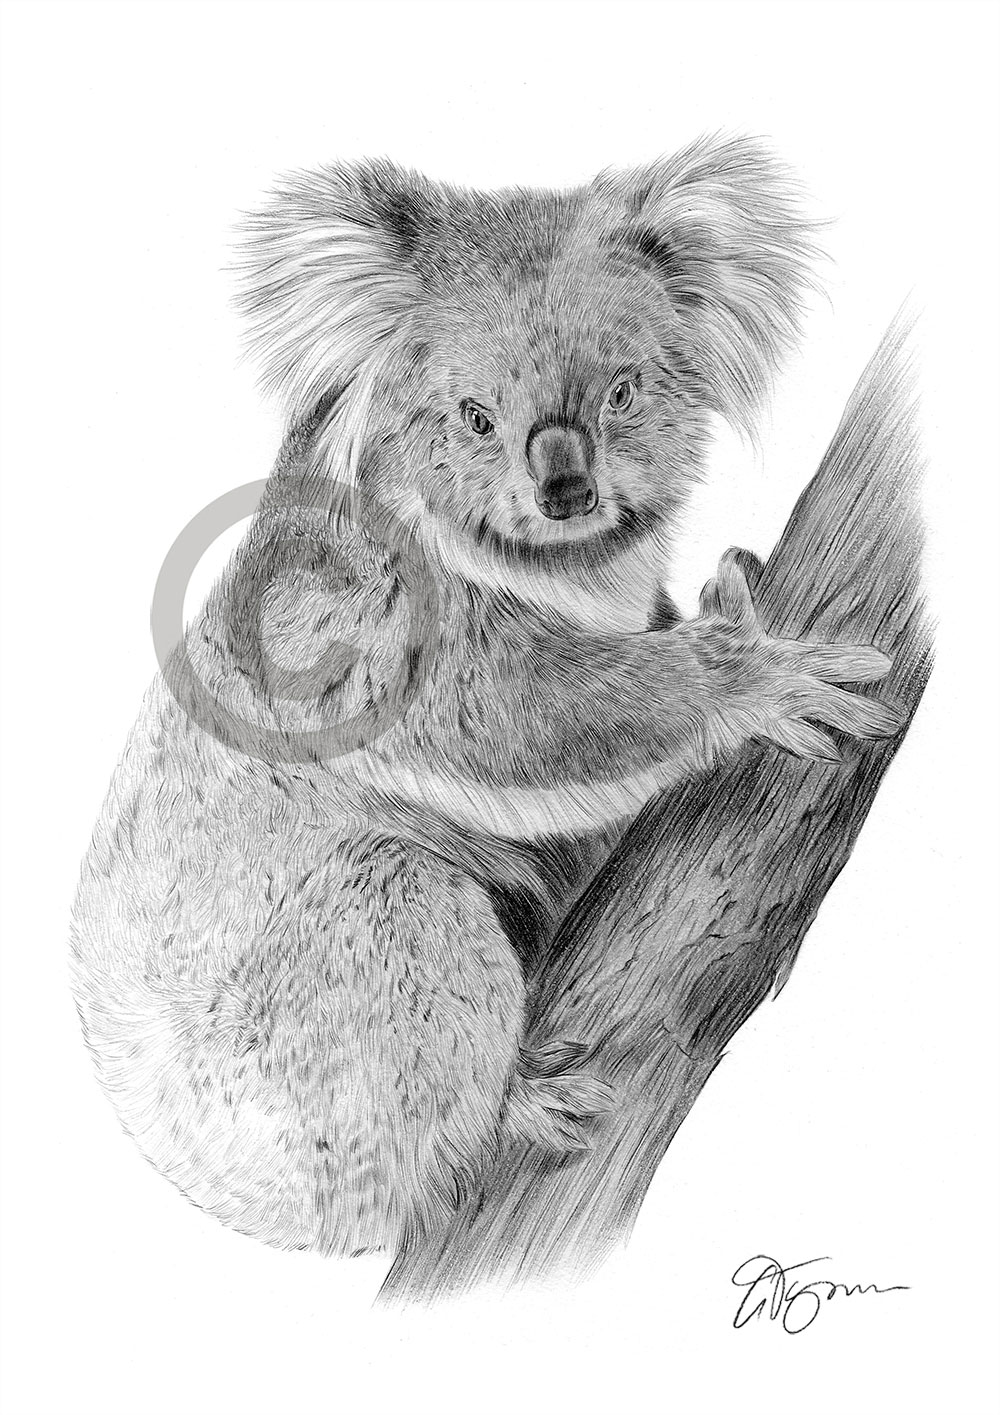 Pencil drawing of an adult koala bear by artist Gary Tymon